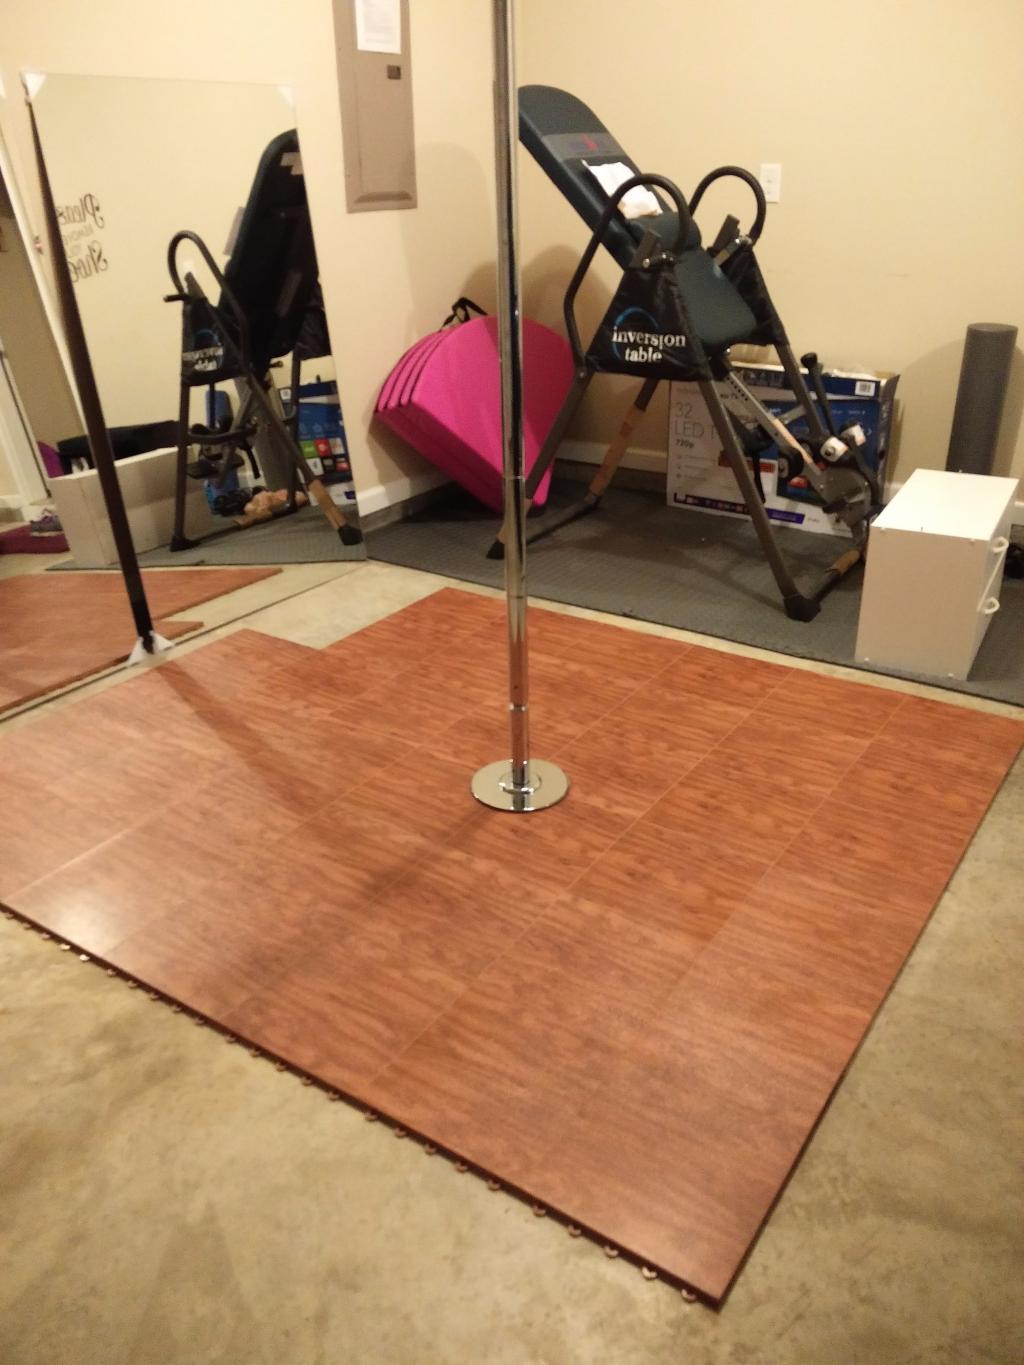 Max Tile Raised Floor Tile 5/8 Inch x 1x1 Ft. customer review photo 1